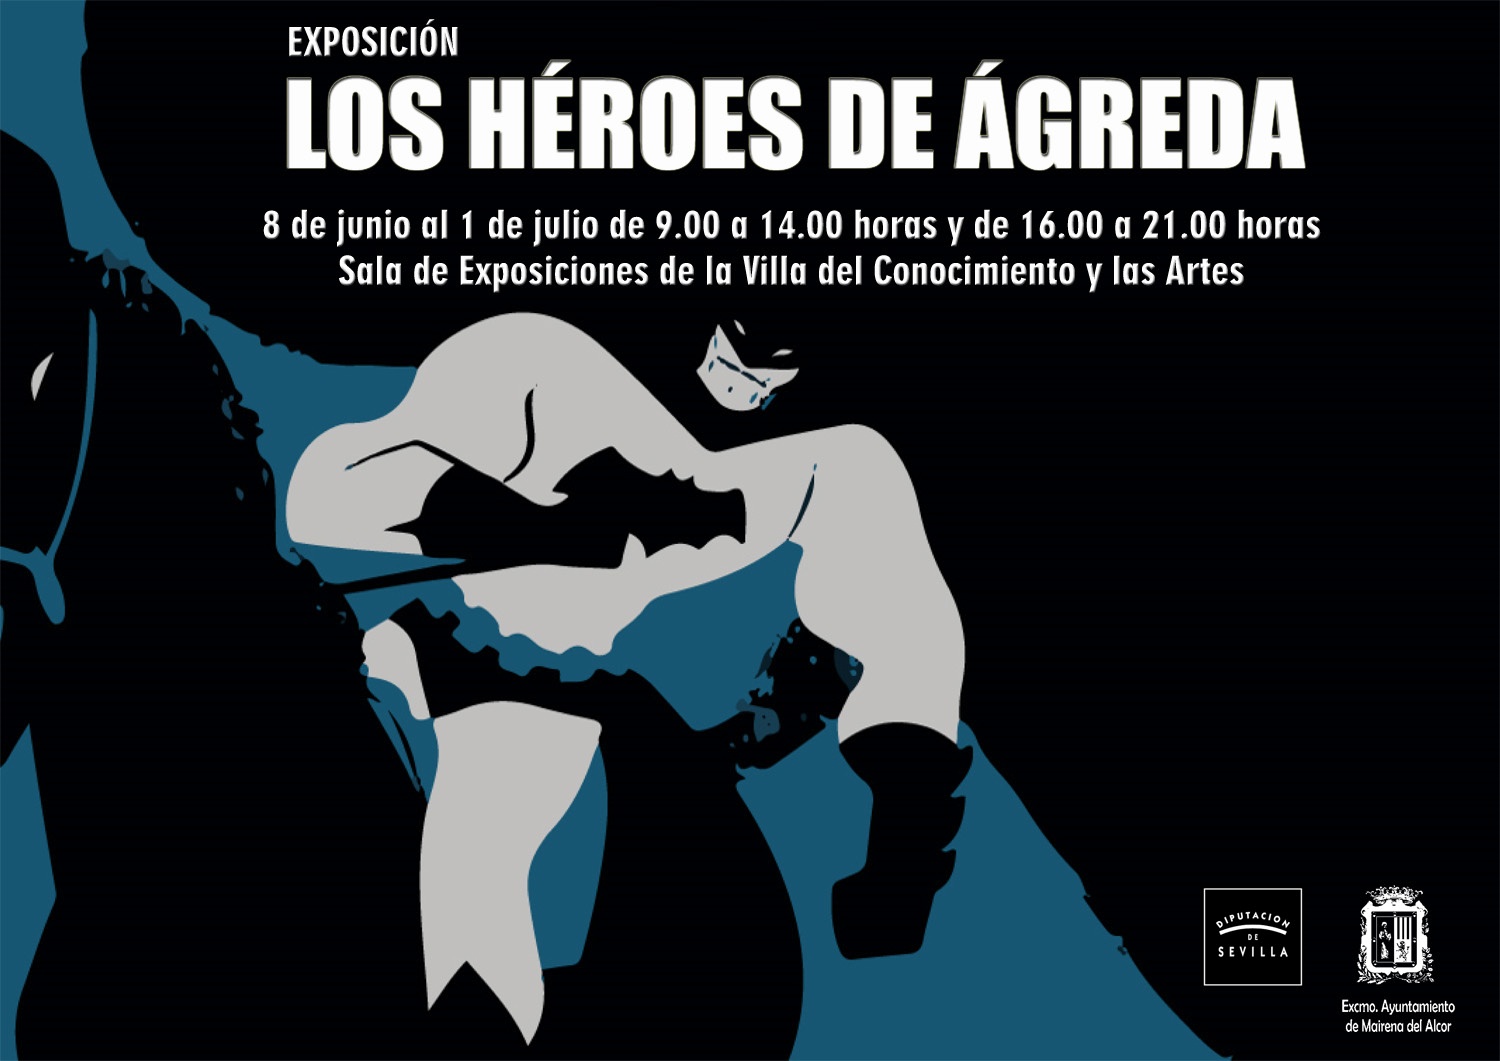 Expo Heroes de Agreda